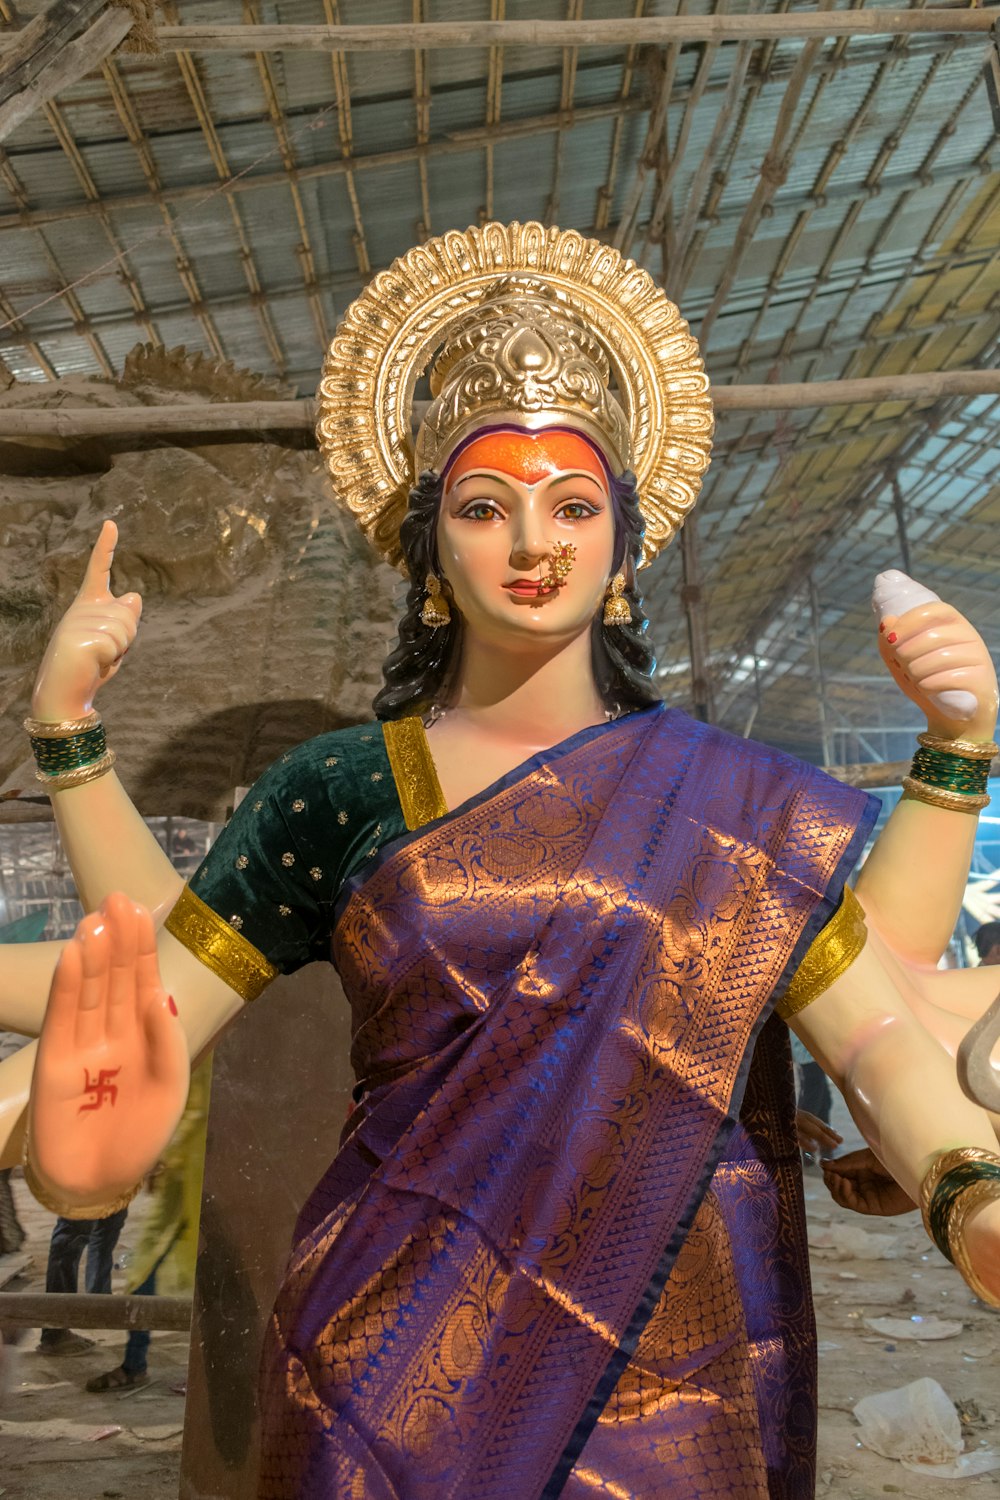 a statue of a woman in a purple sari